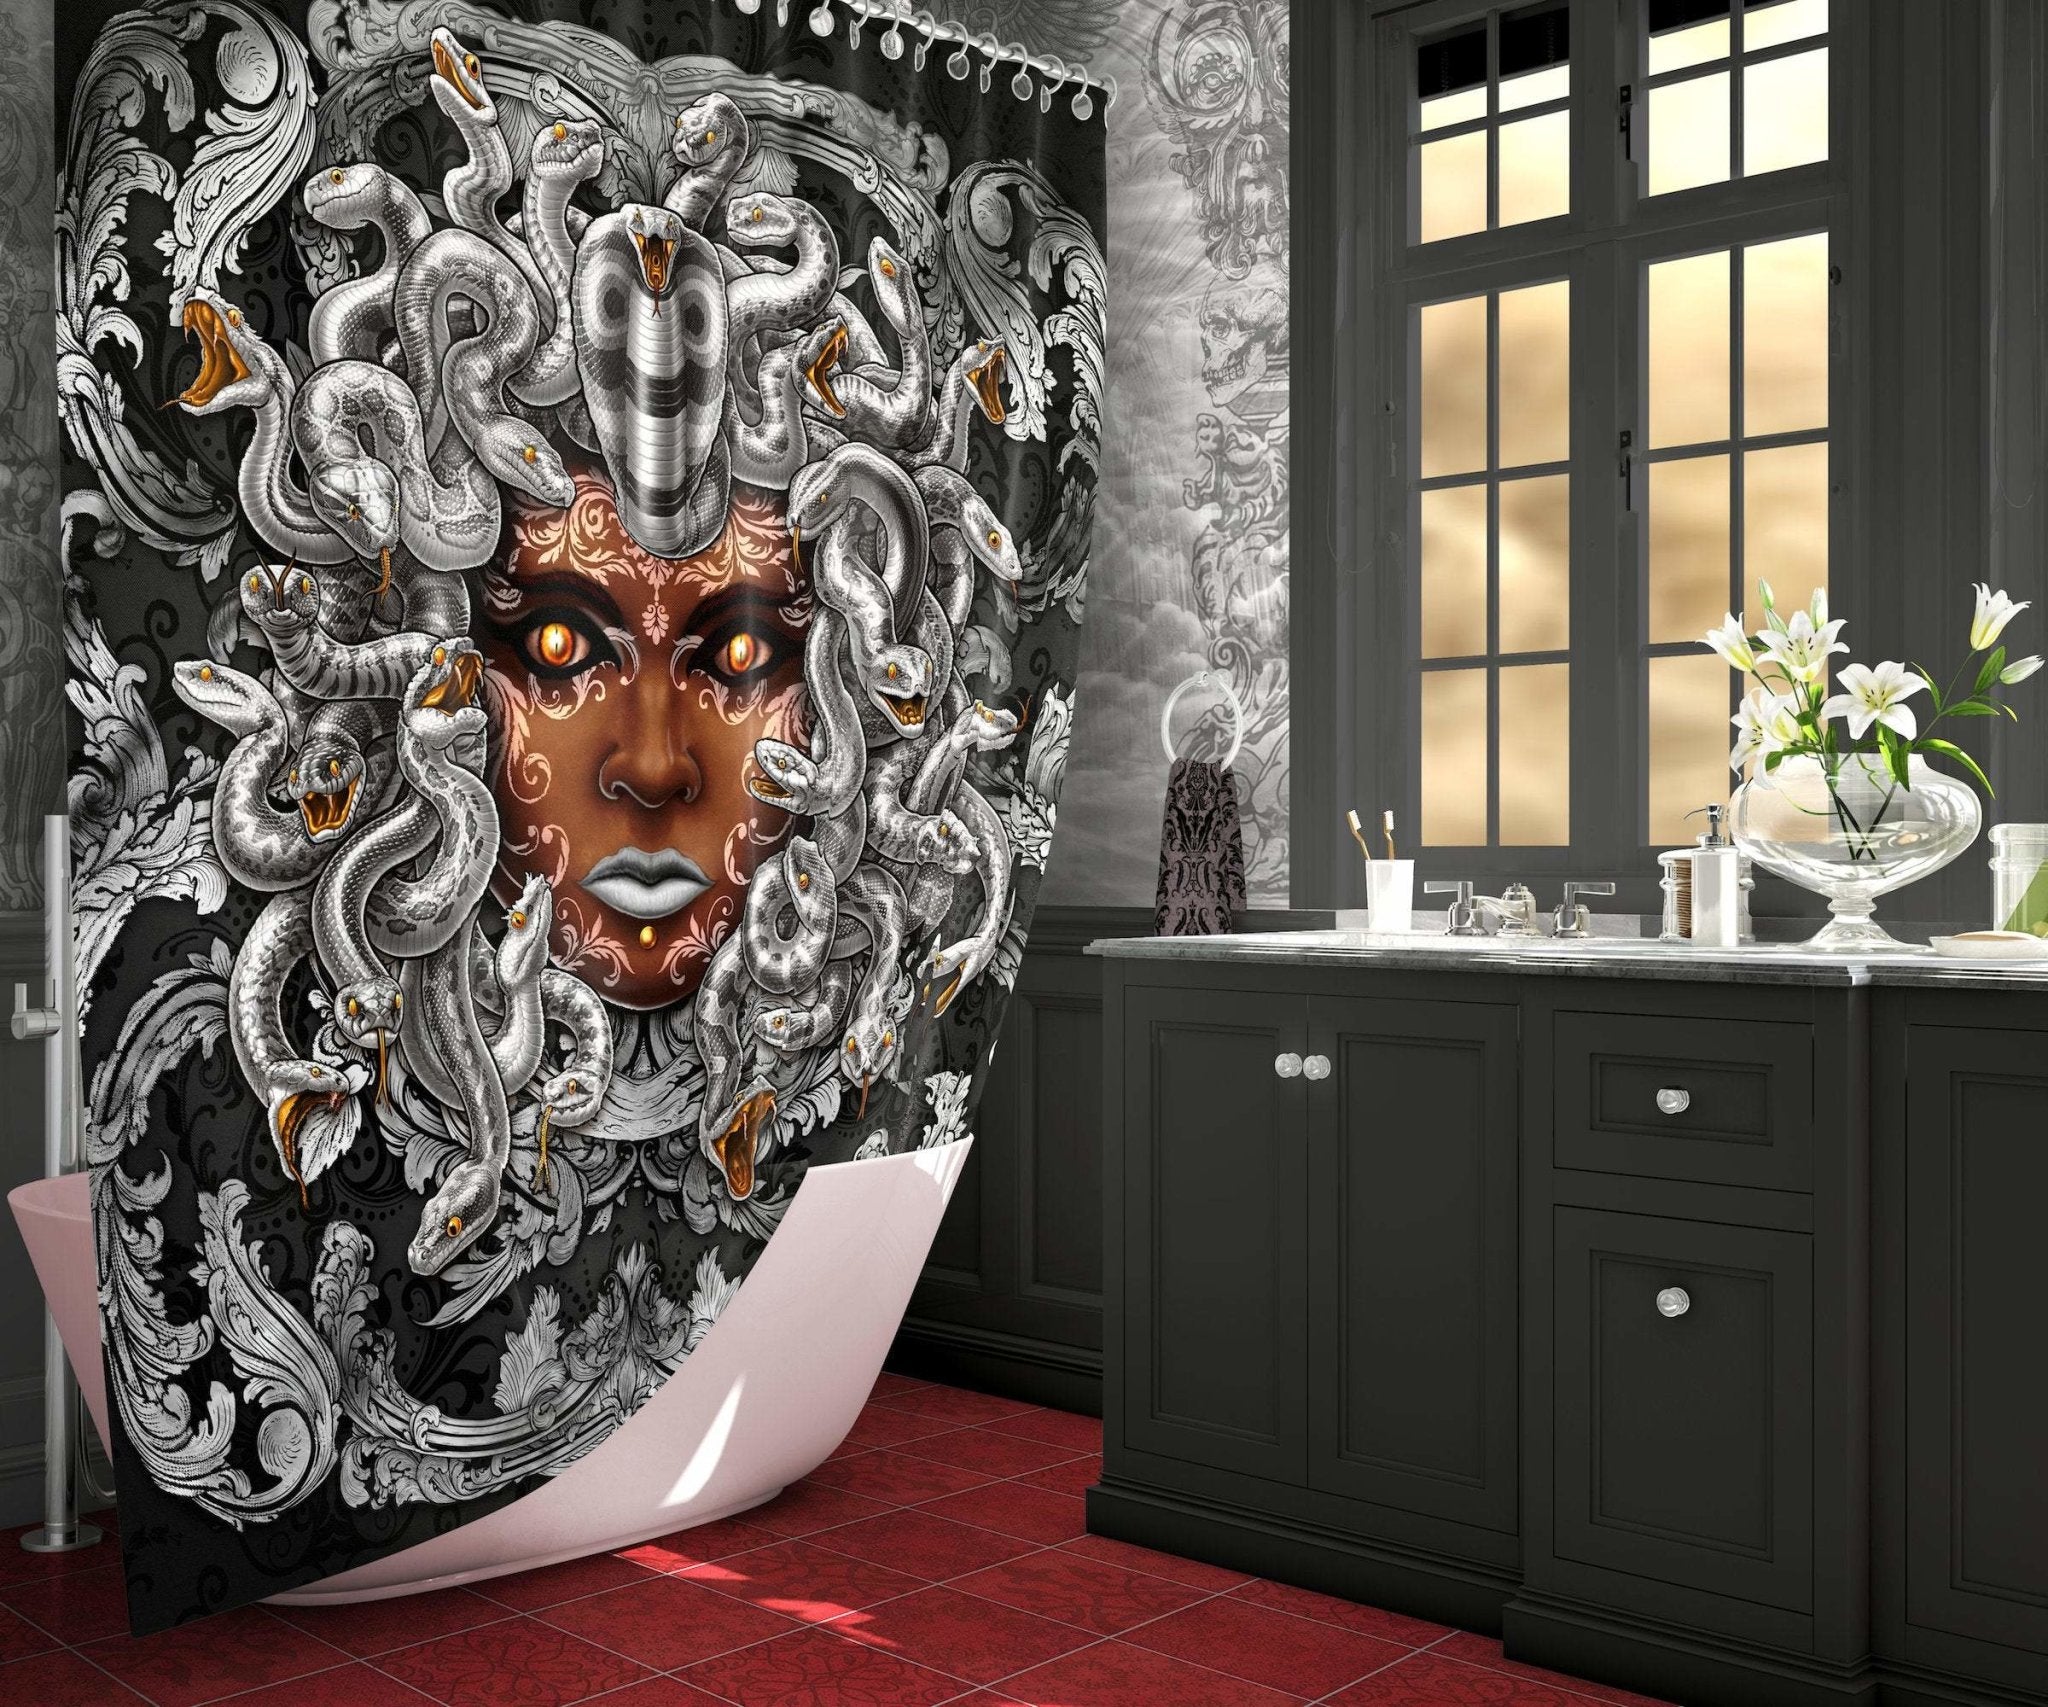 Medusa Shower Curtain, Indie and Alternative Bathroom Decor - Silver Snakes - Abysm Internal